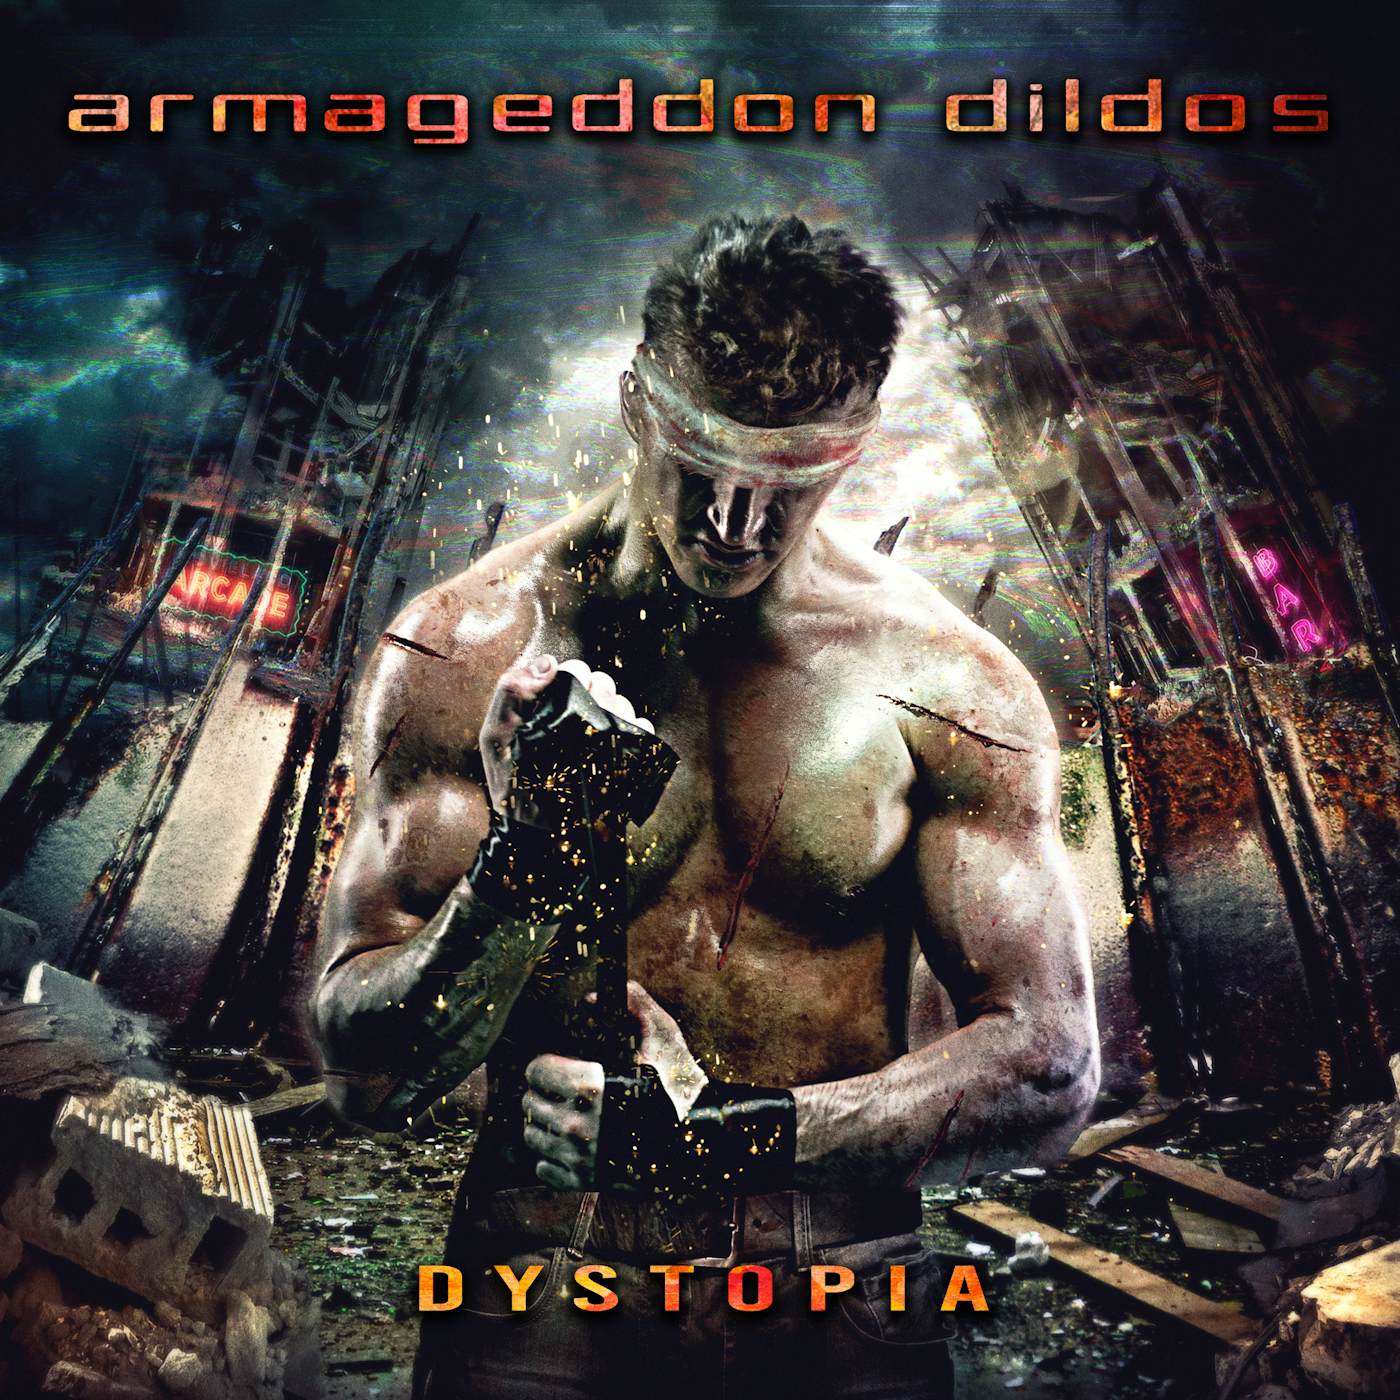 Armageddon Dildos DYSTOPIA CD